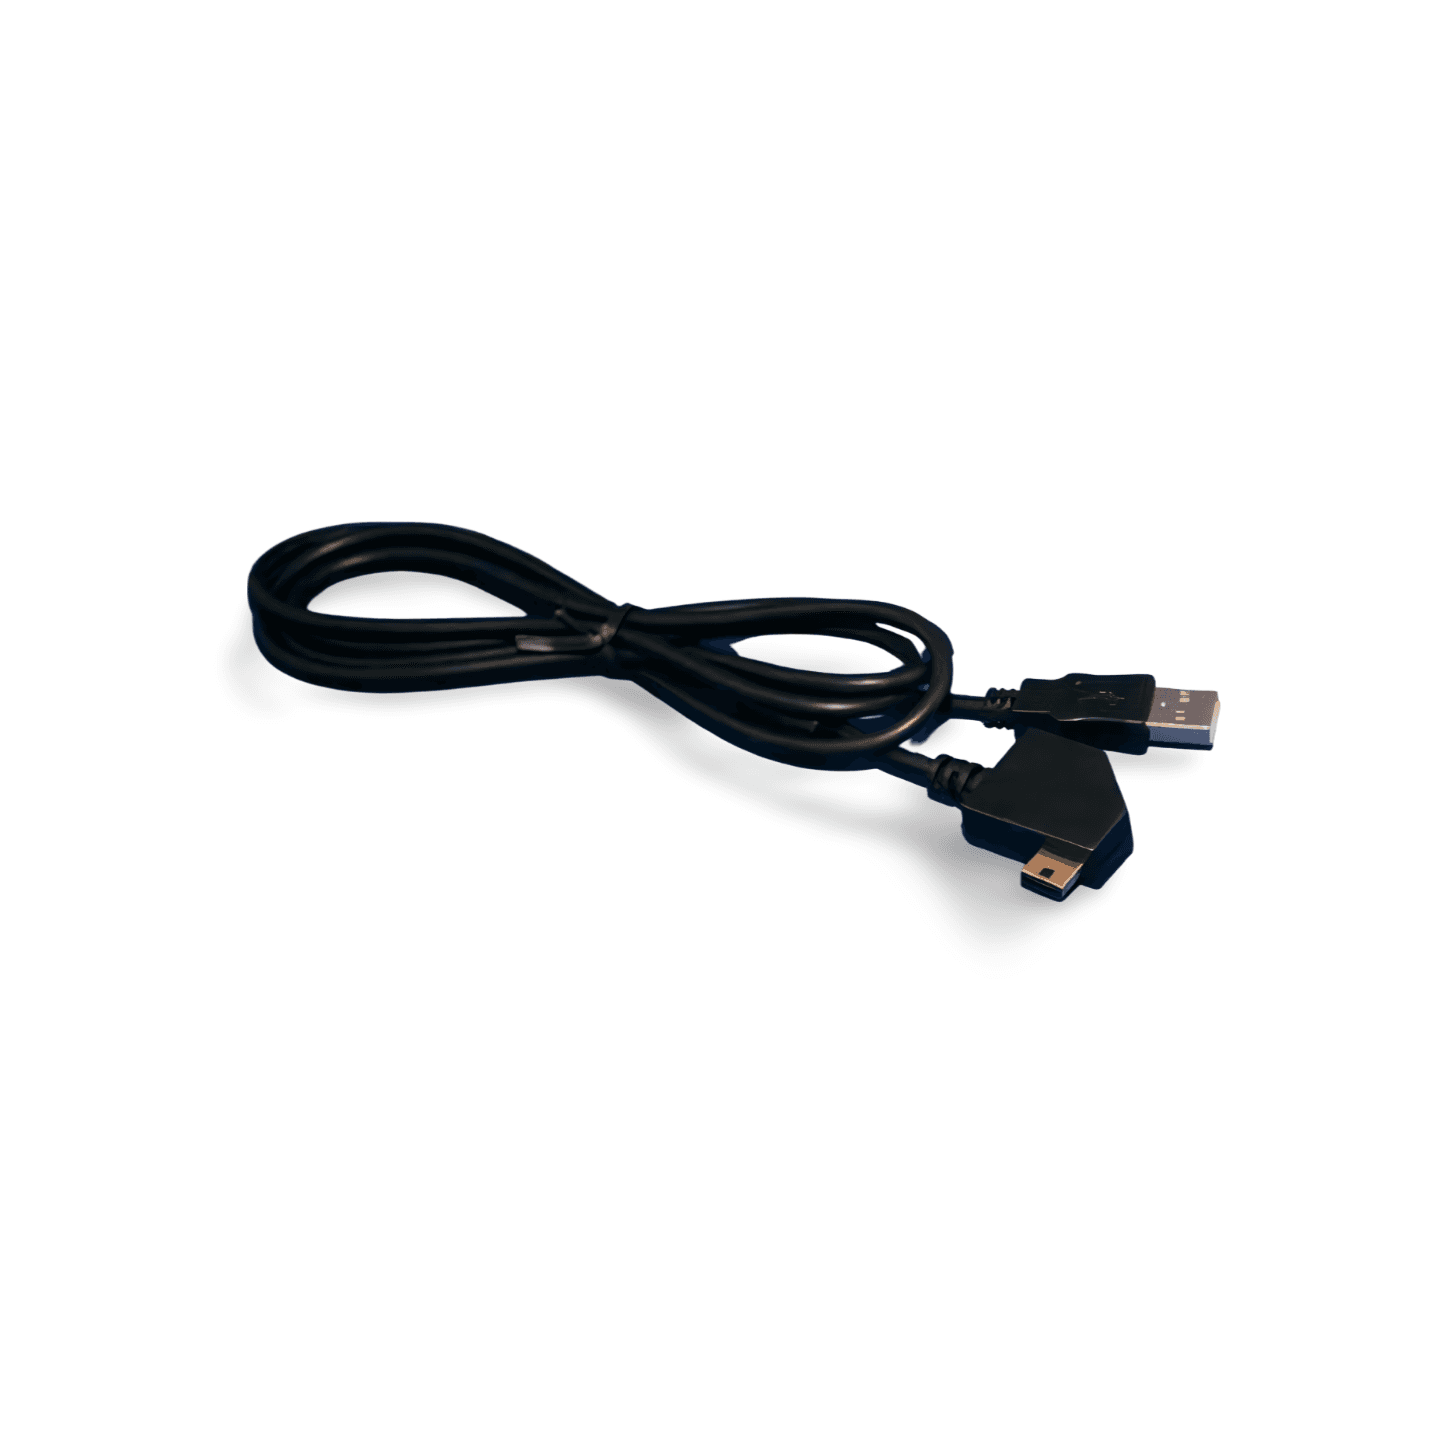 4 8ft Kodak Dock Connect Camera Cable USB Compatible black